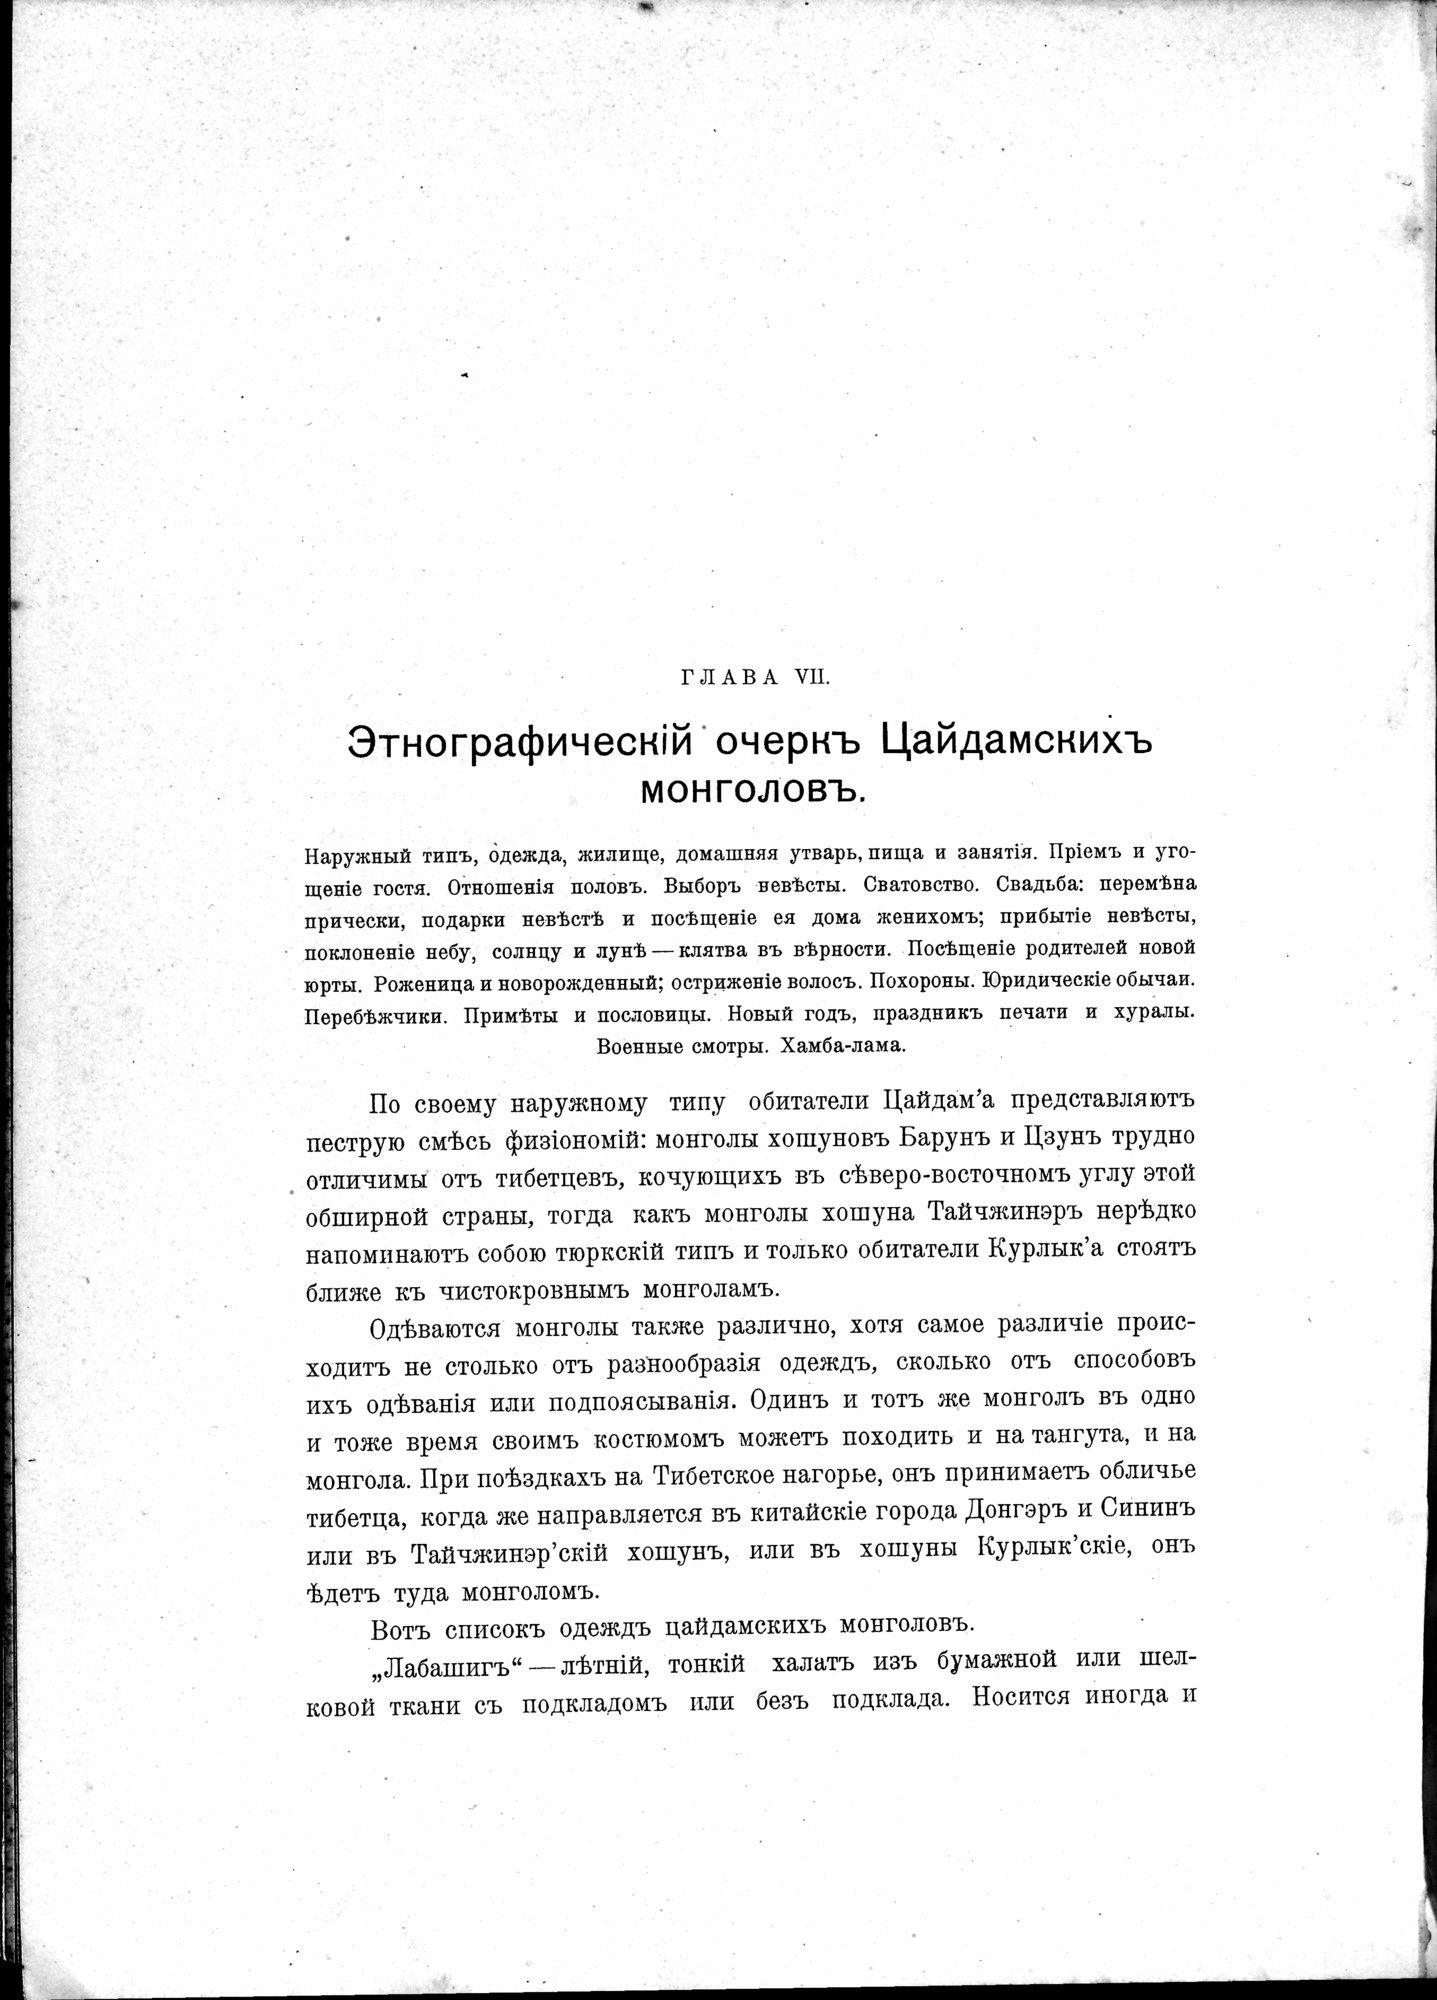 Mongoliia i Kam : vol.1 / Page 262 (Grayscale High Resolution Image)